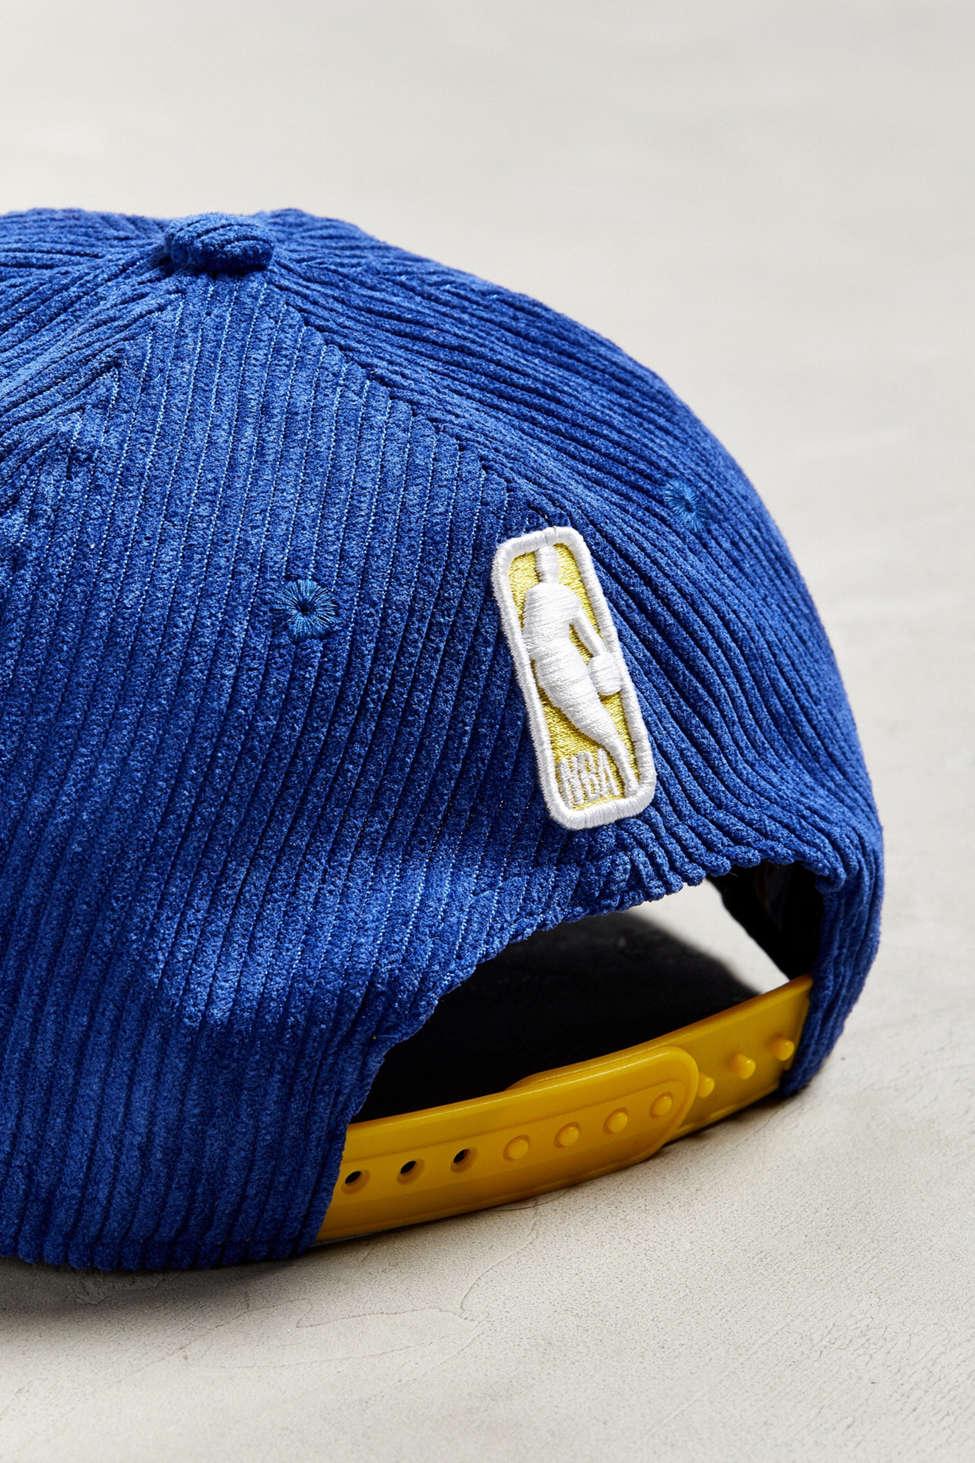 KTZ Philadelphia 76ers Retro Corduroy Snapback Hat in Blue for Men